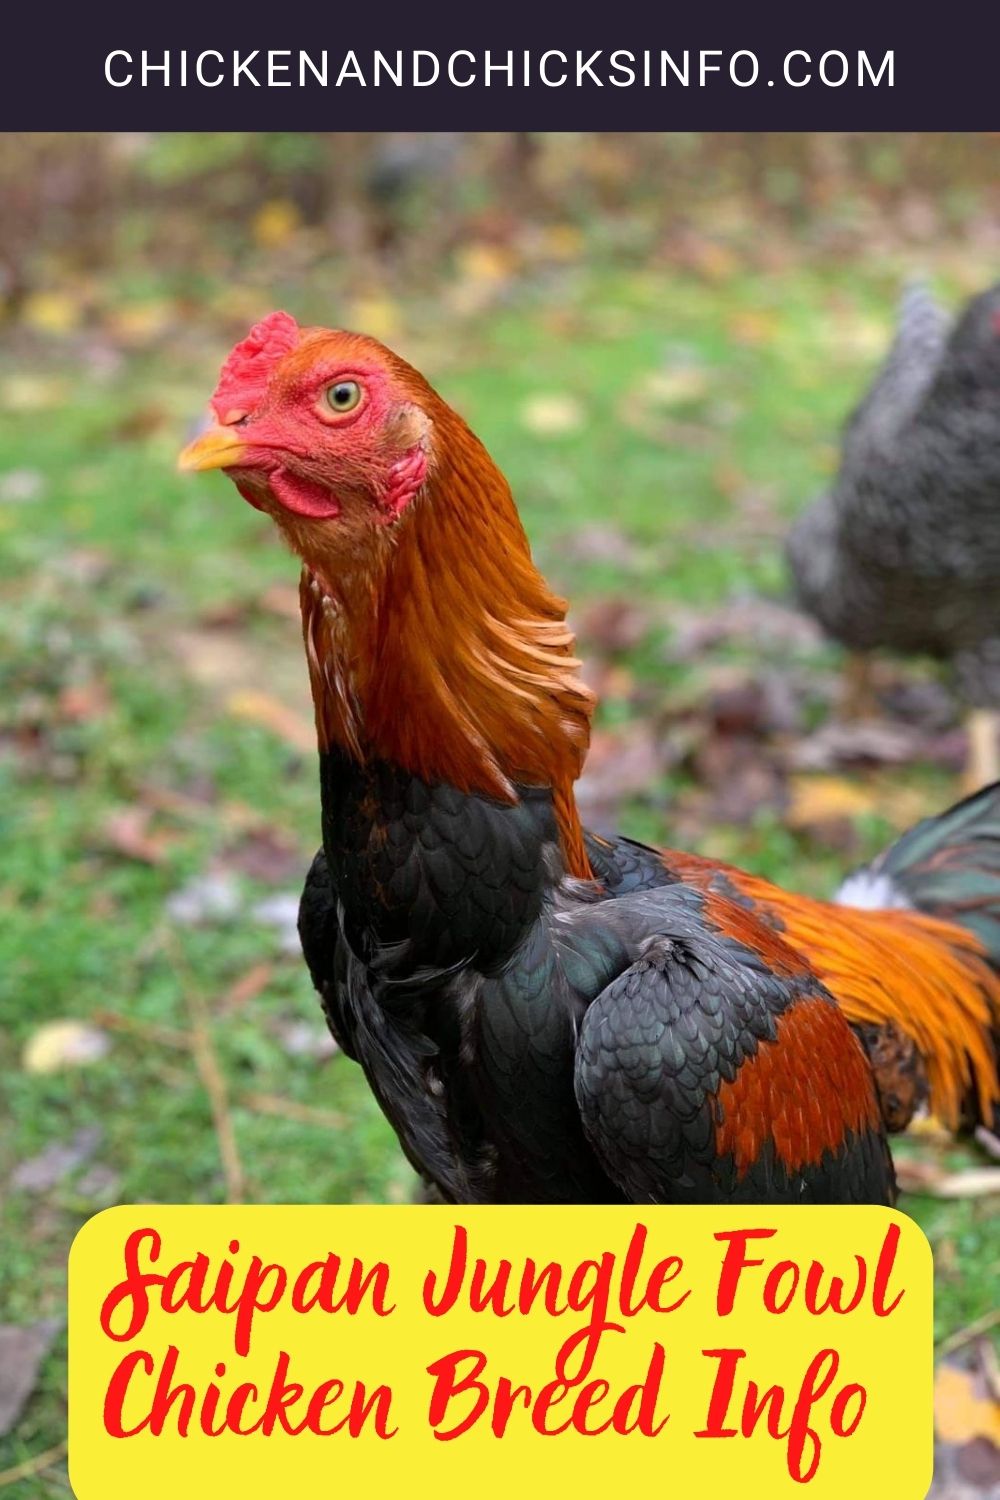 Saipan Jungle Fowl Chicken Breed Info + Where to Buy pinterest image.